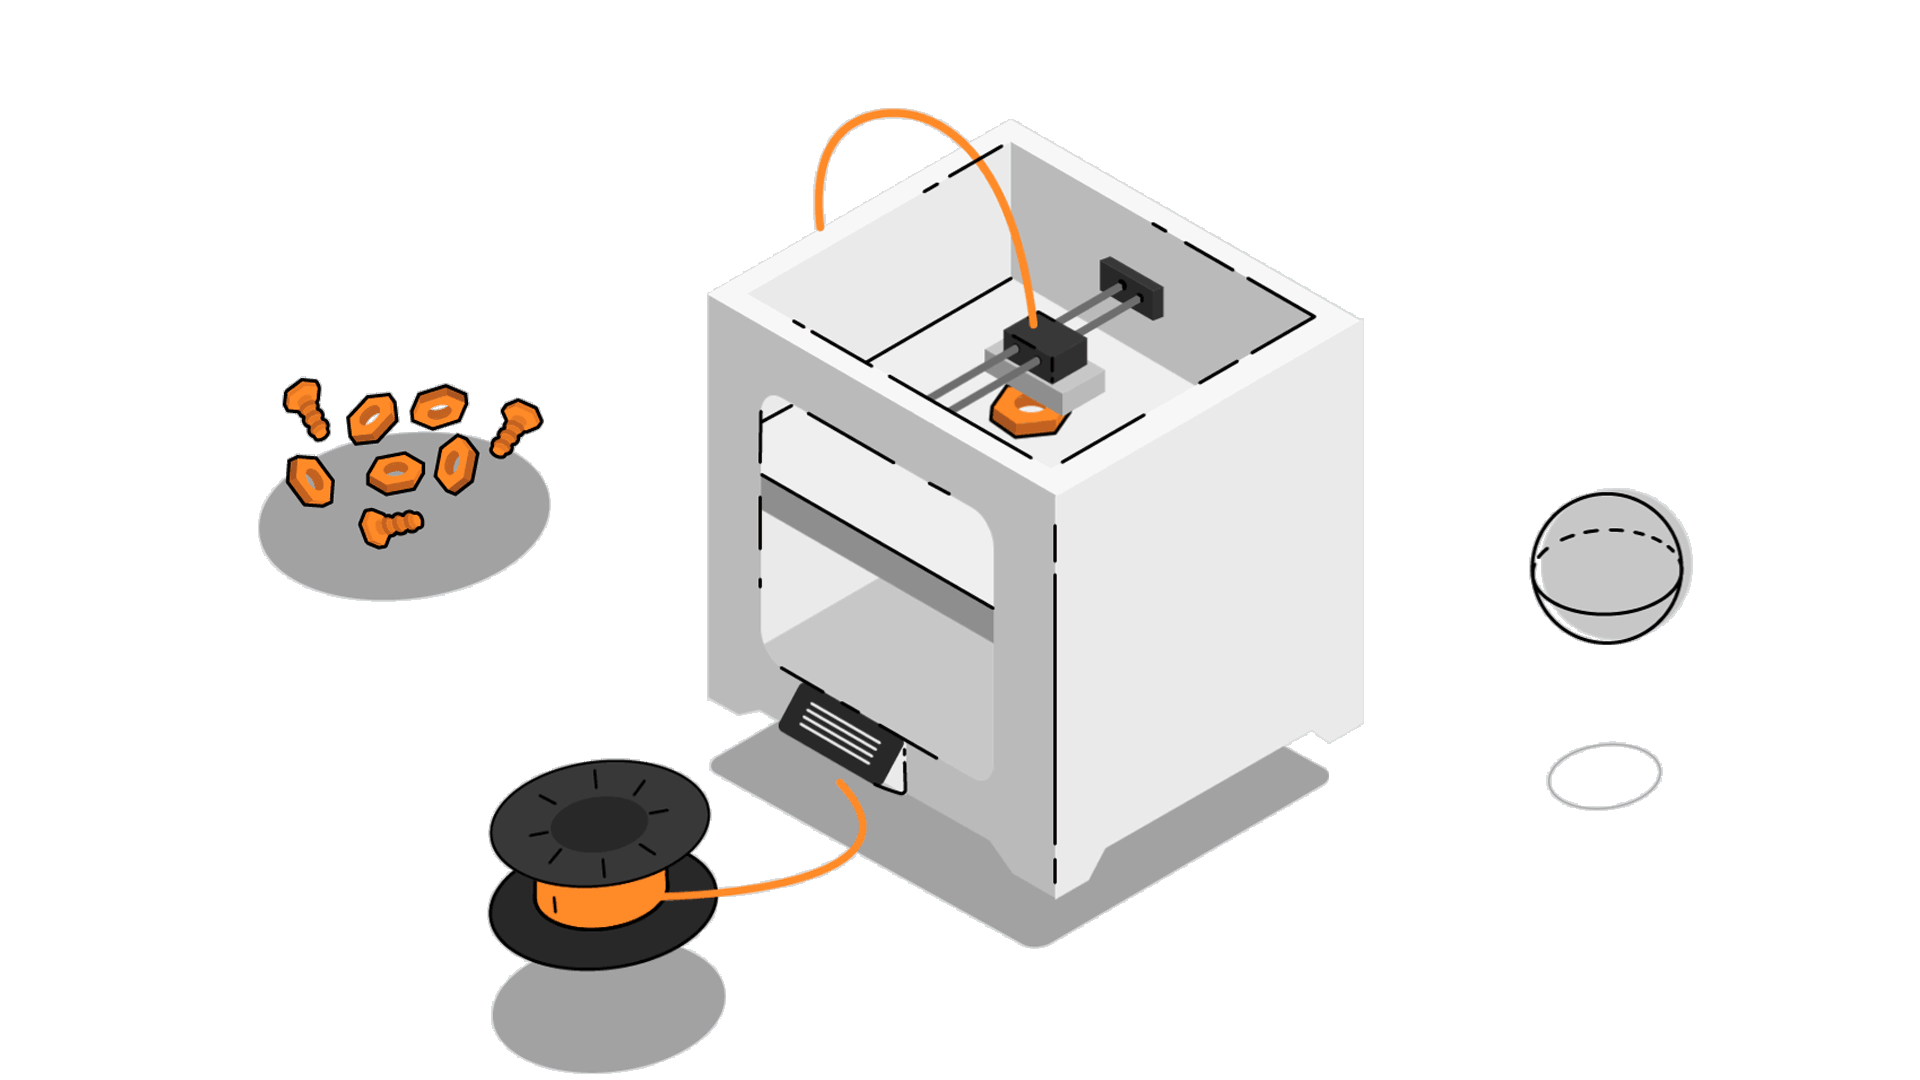 printer-3